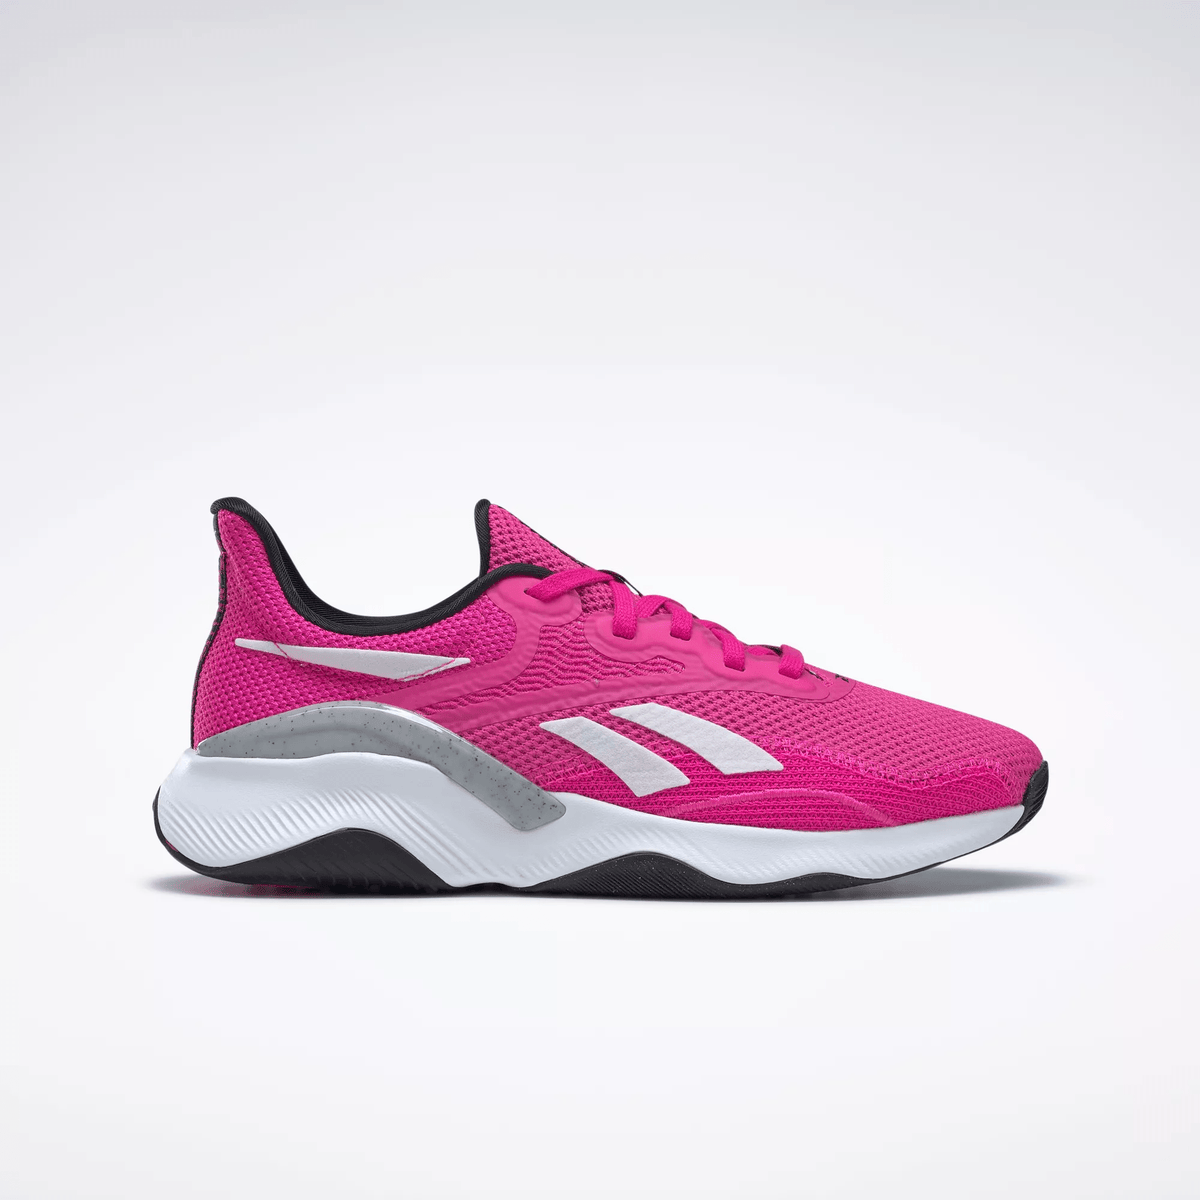 Reebok Women's HIIT TR 3 Training Shoes Pink